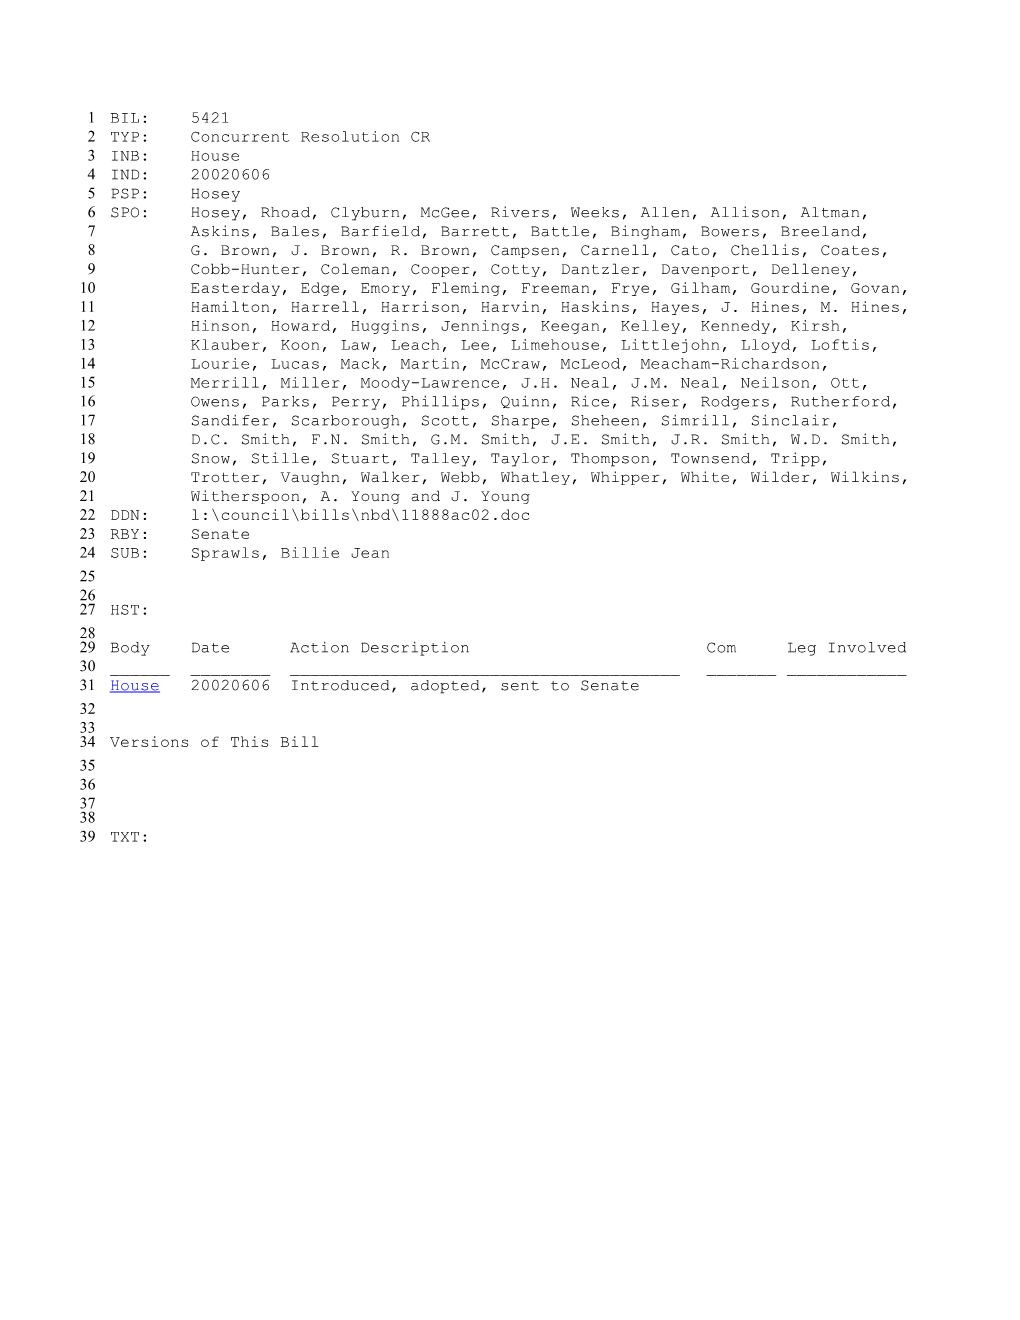 2001-2002 Bill 5421: Sprawls, Billie Jean - South Carolina Legislature Online